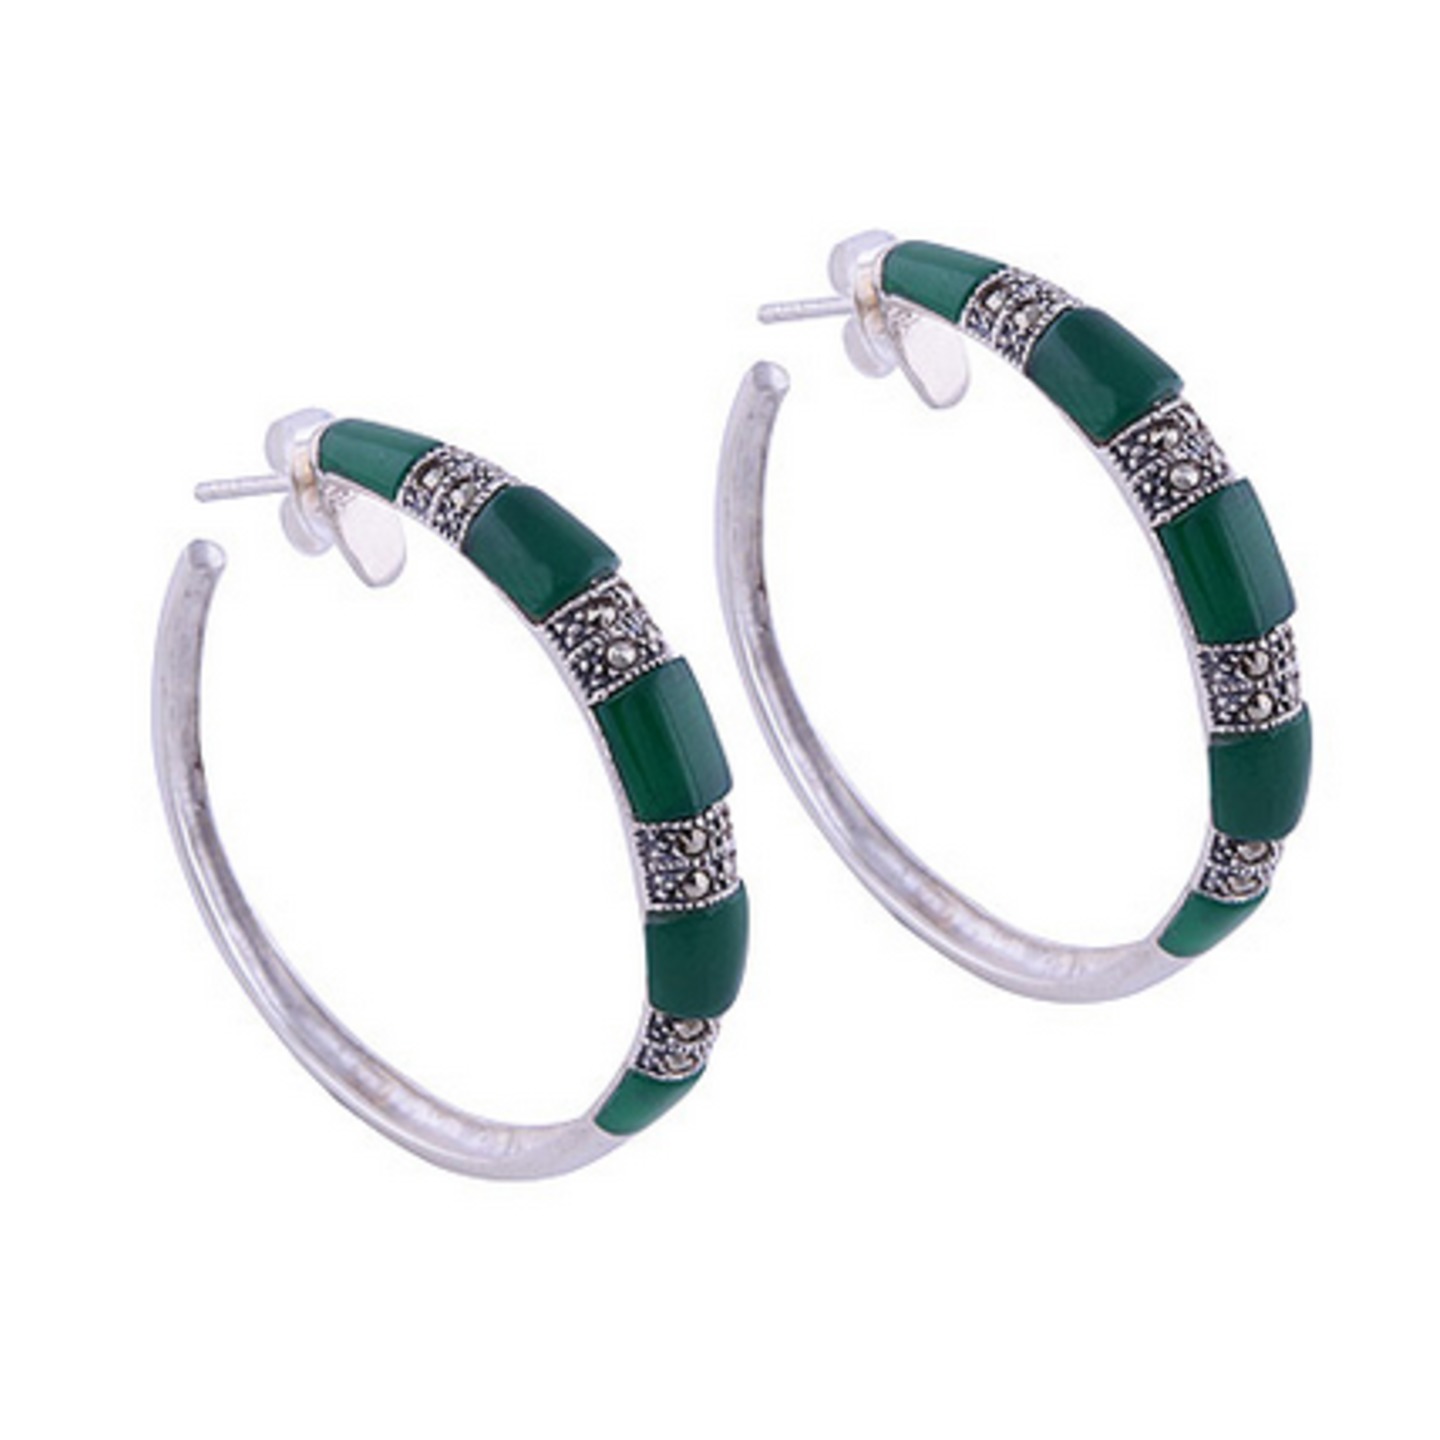 The Green Onyx & Marcasite Silver Earrings